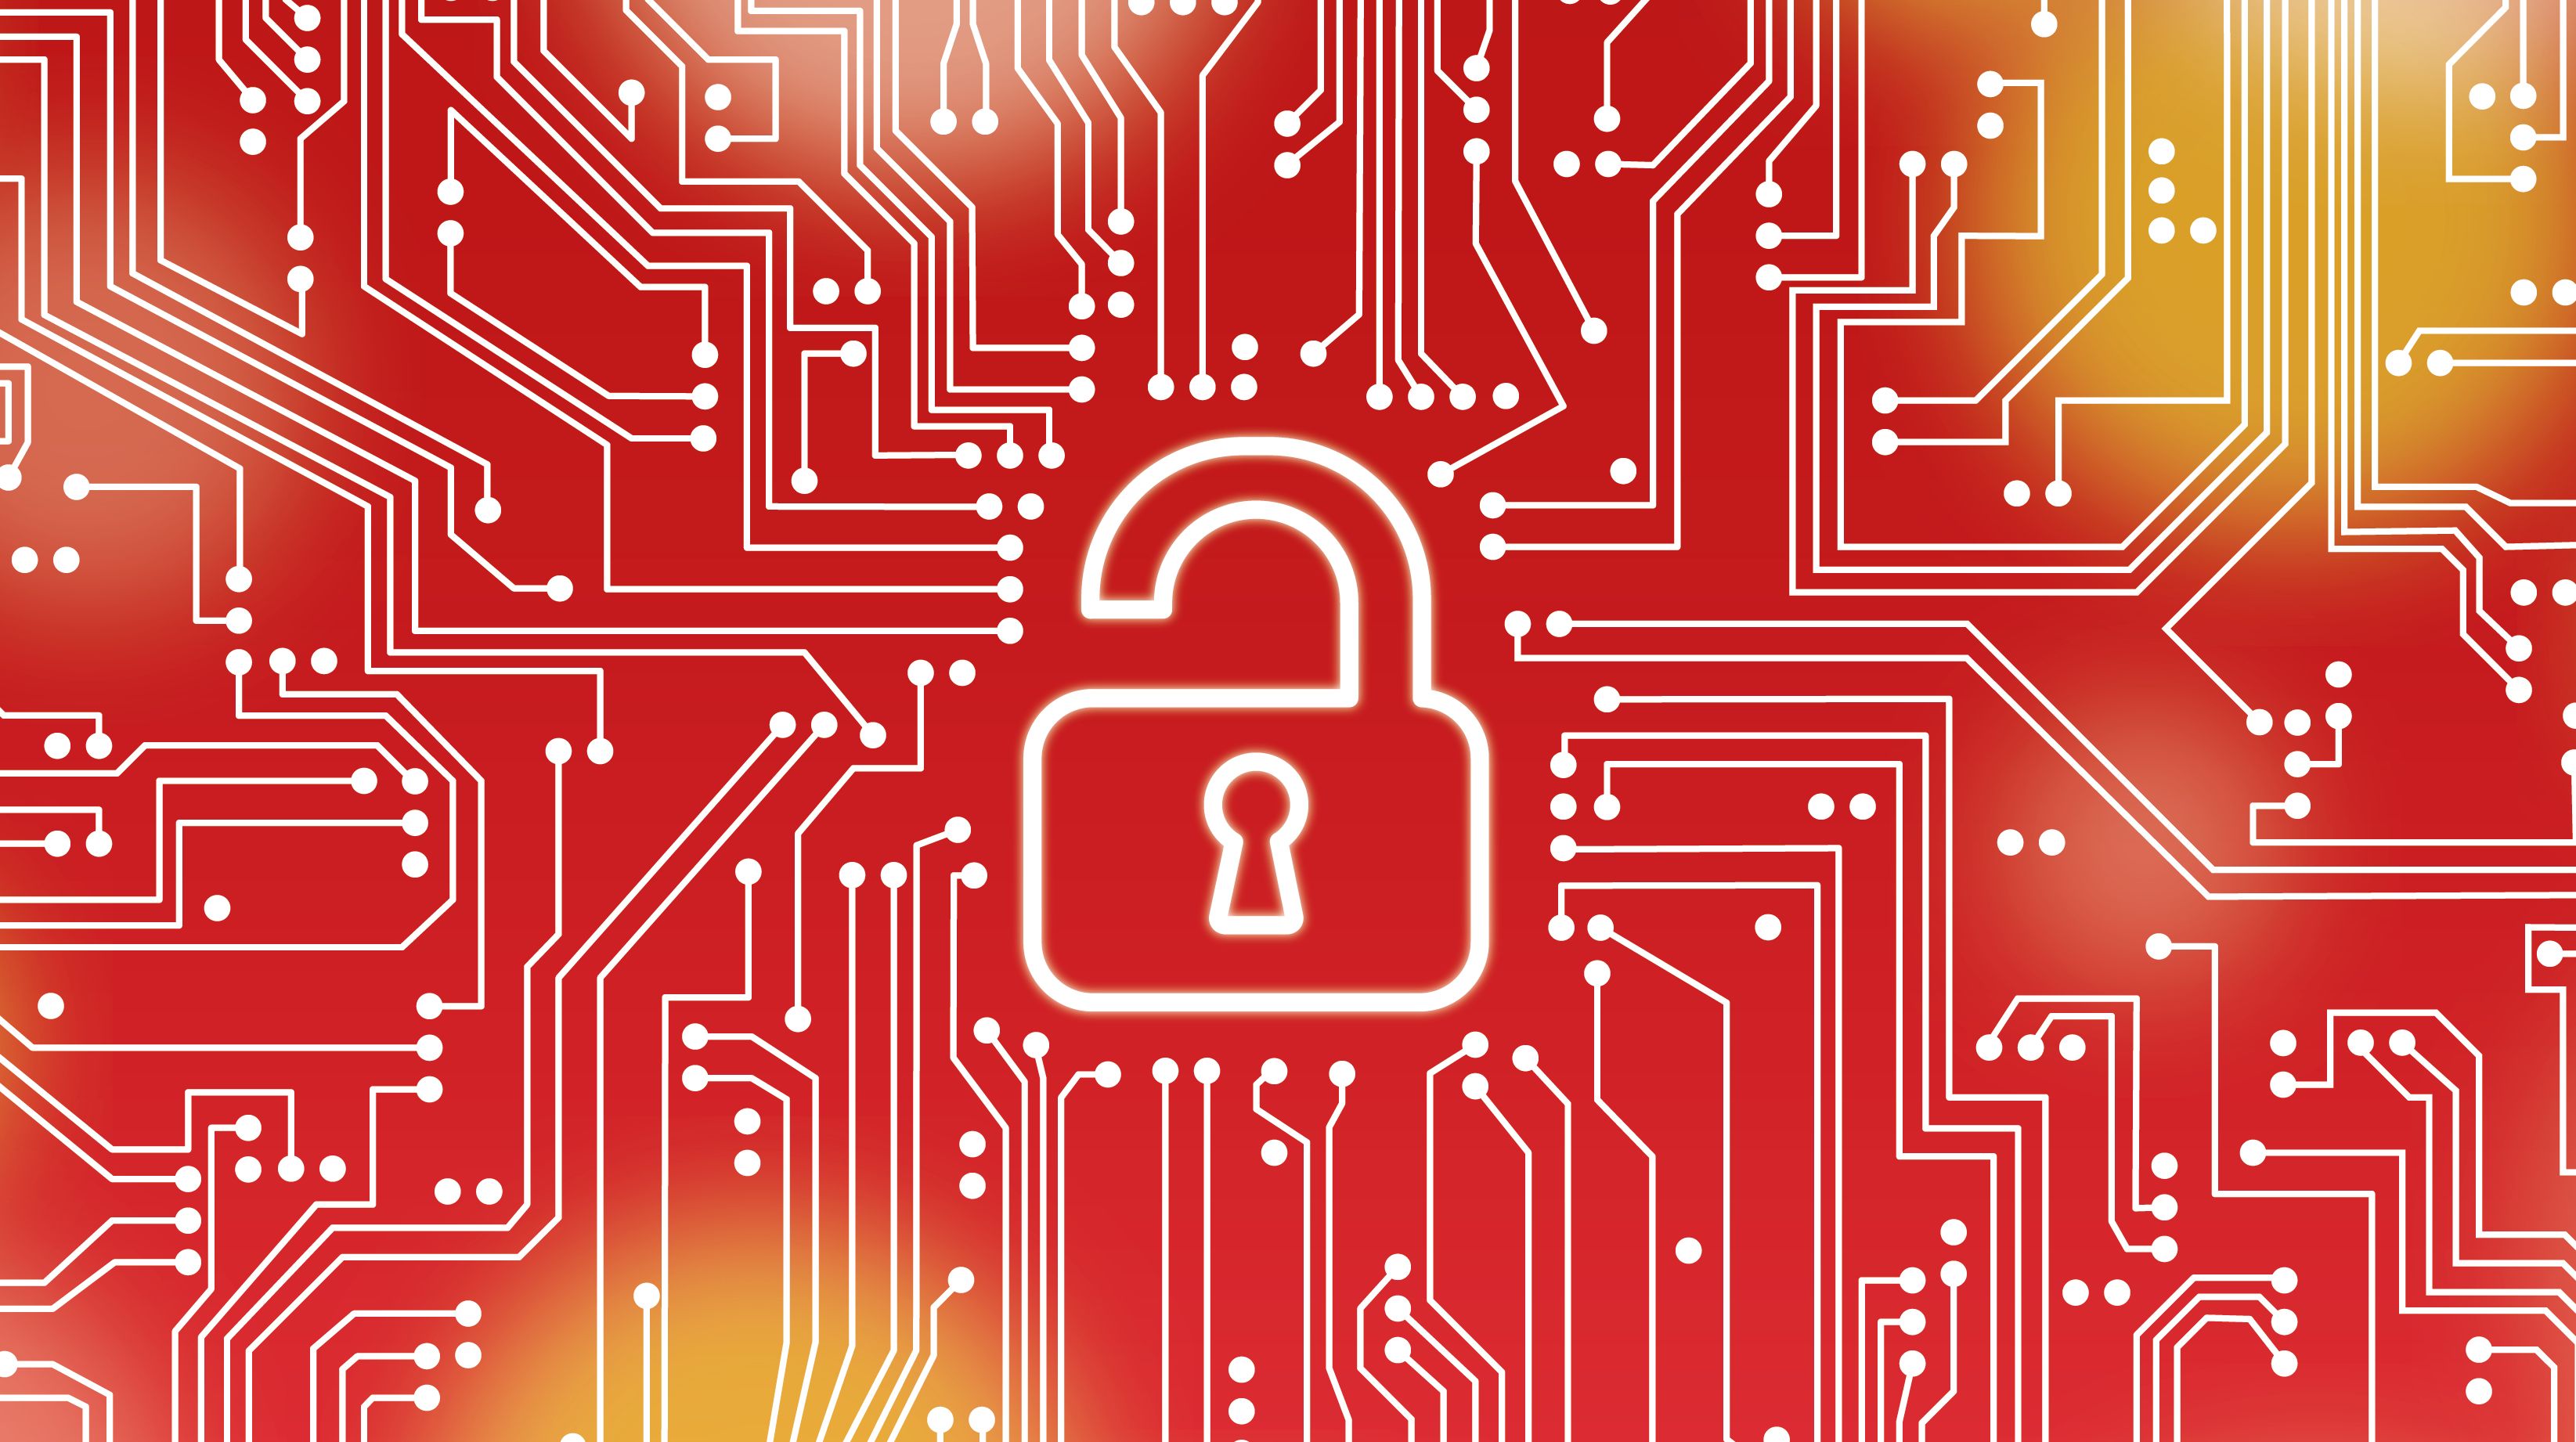 Digitalized lock on red background illustrating encryption.